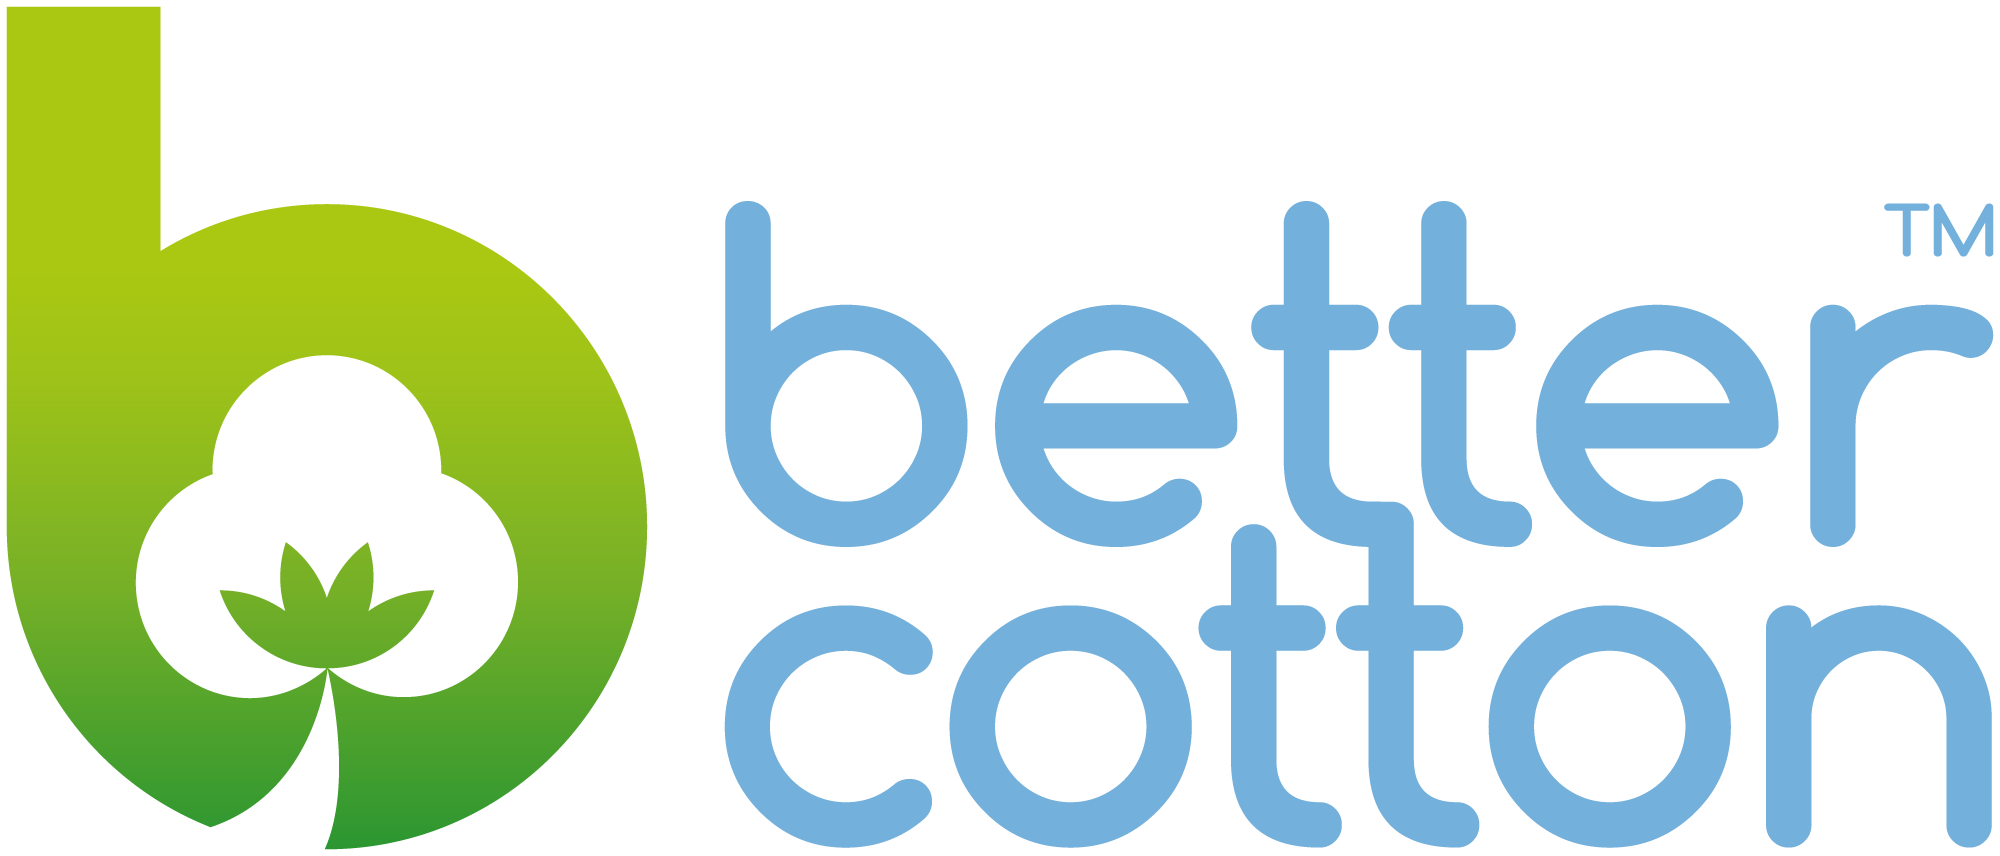 Better Cotton logo.